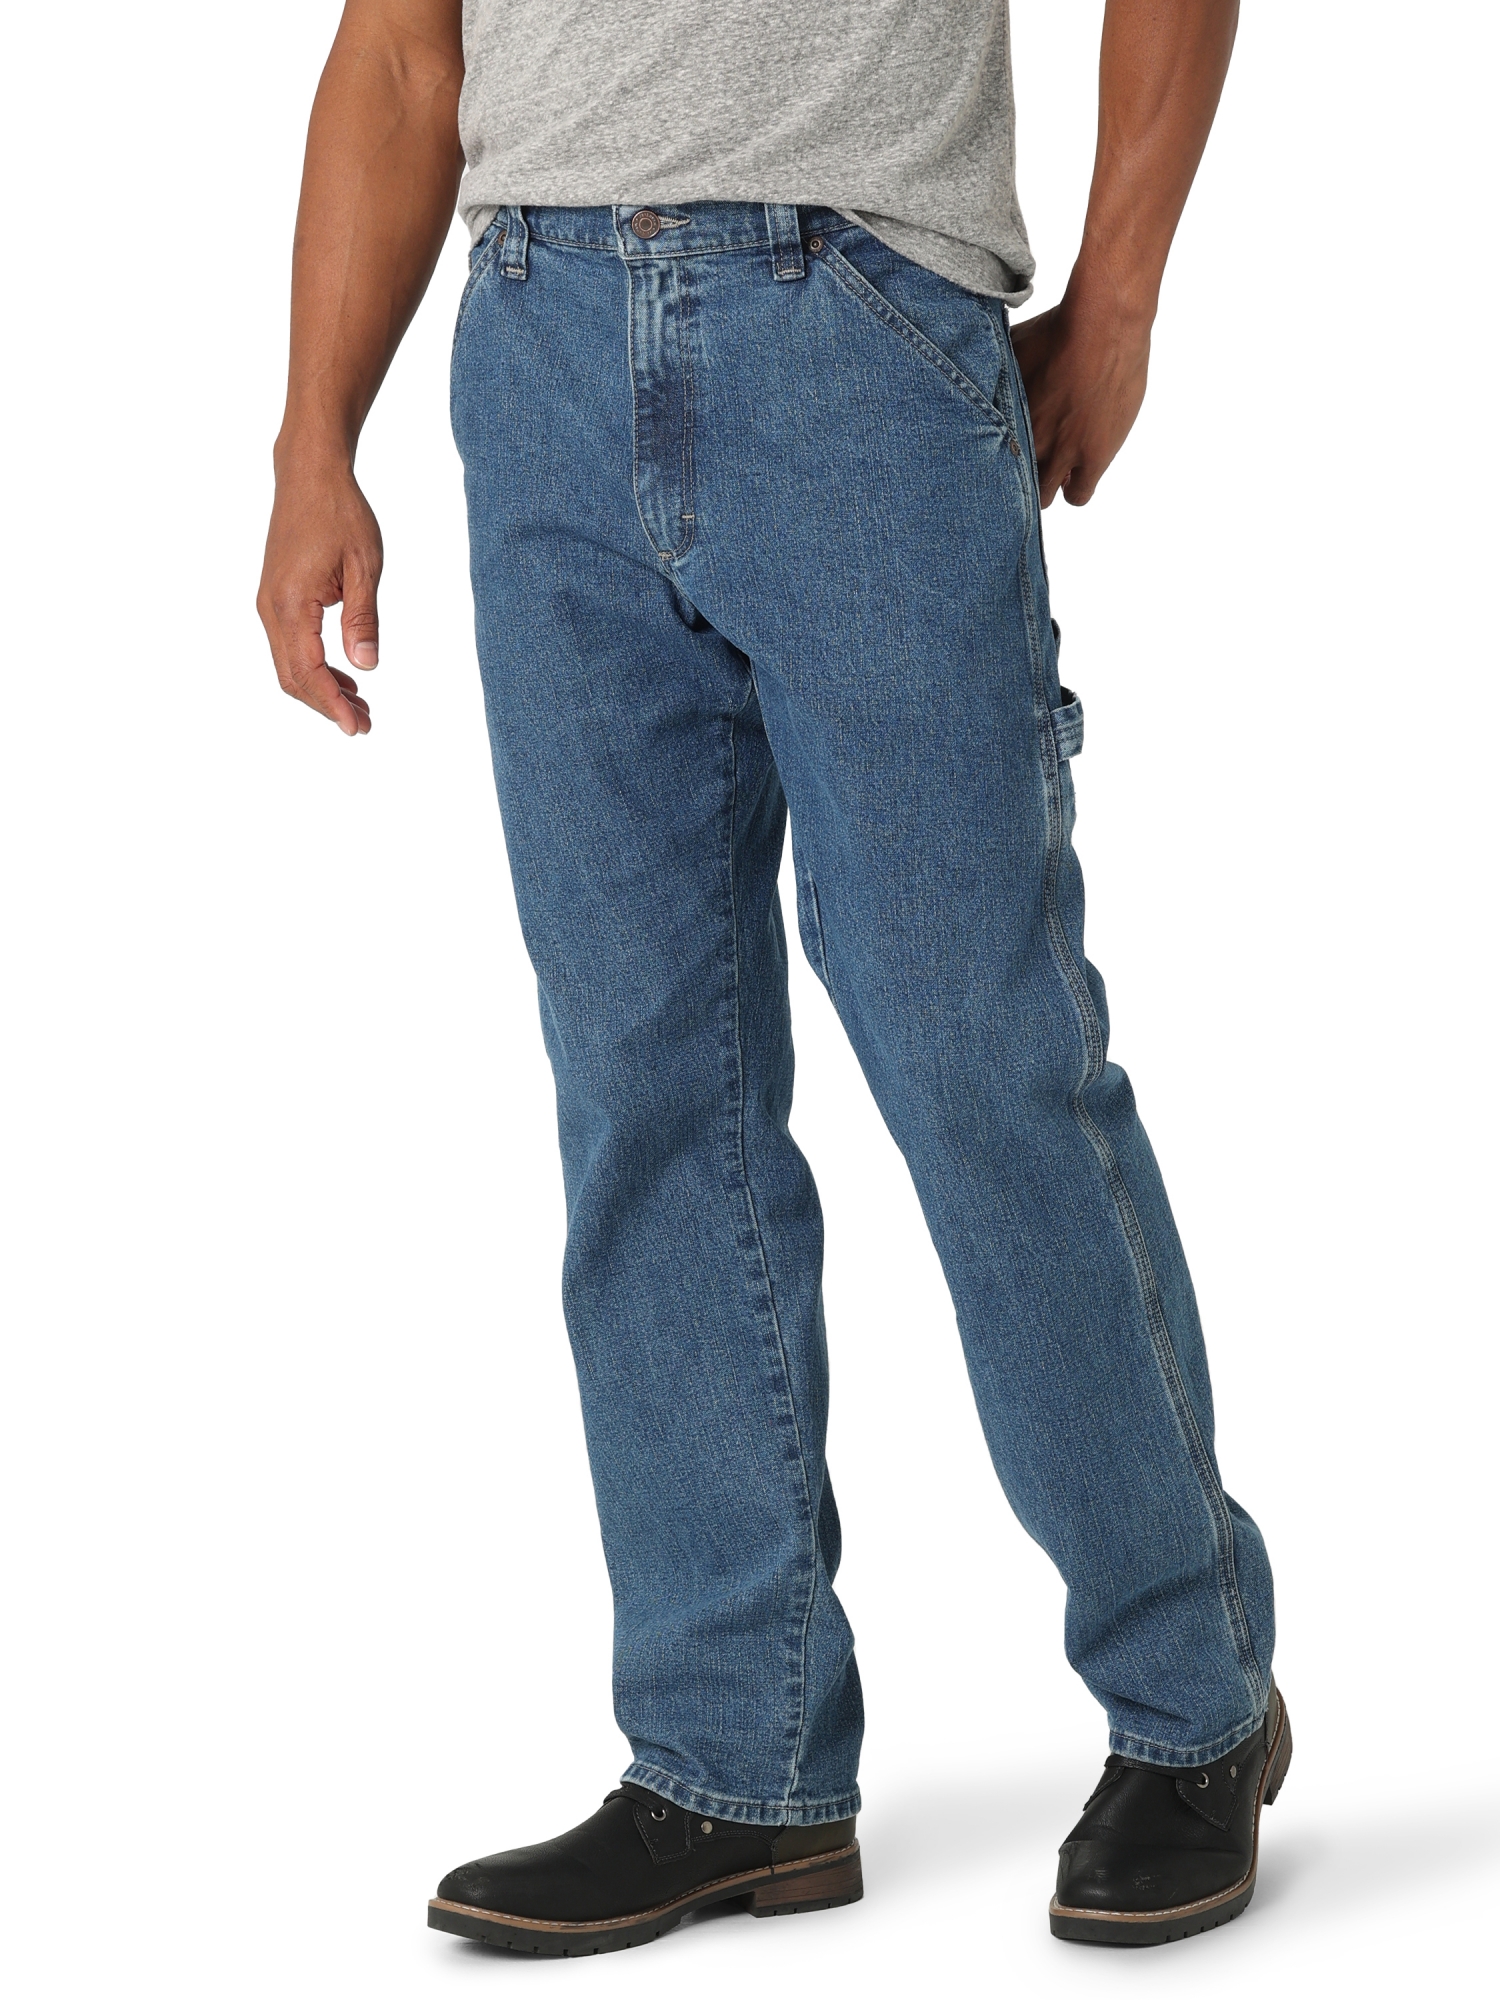 Wrangler Men's Carpenter Jean with Flex - image 1 of 8